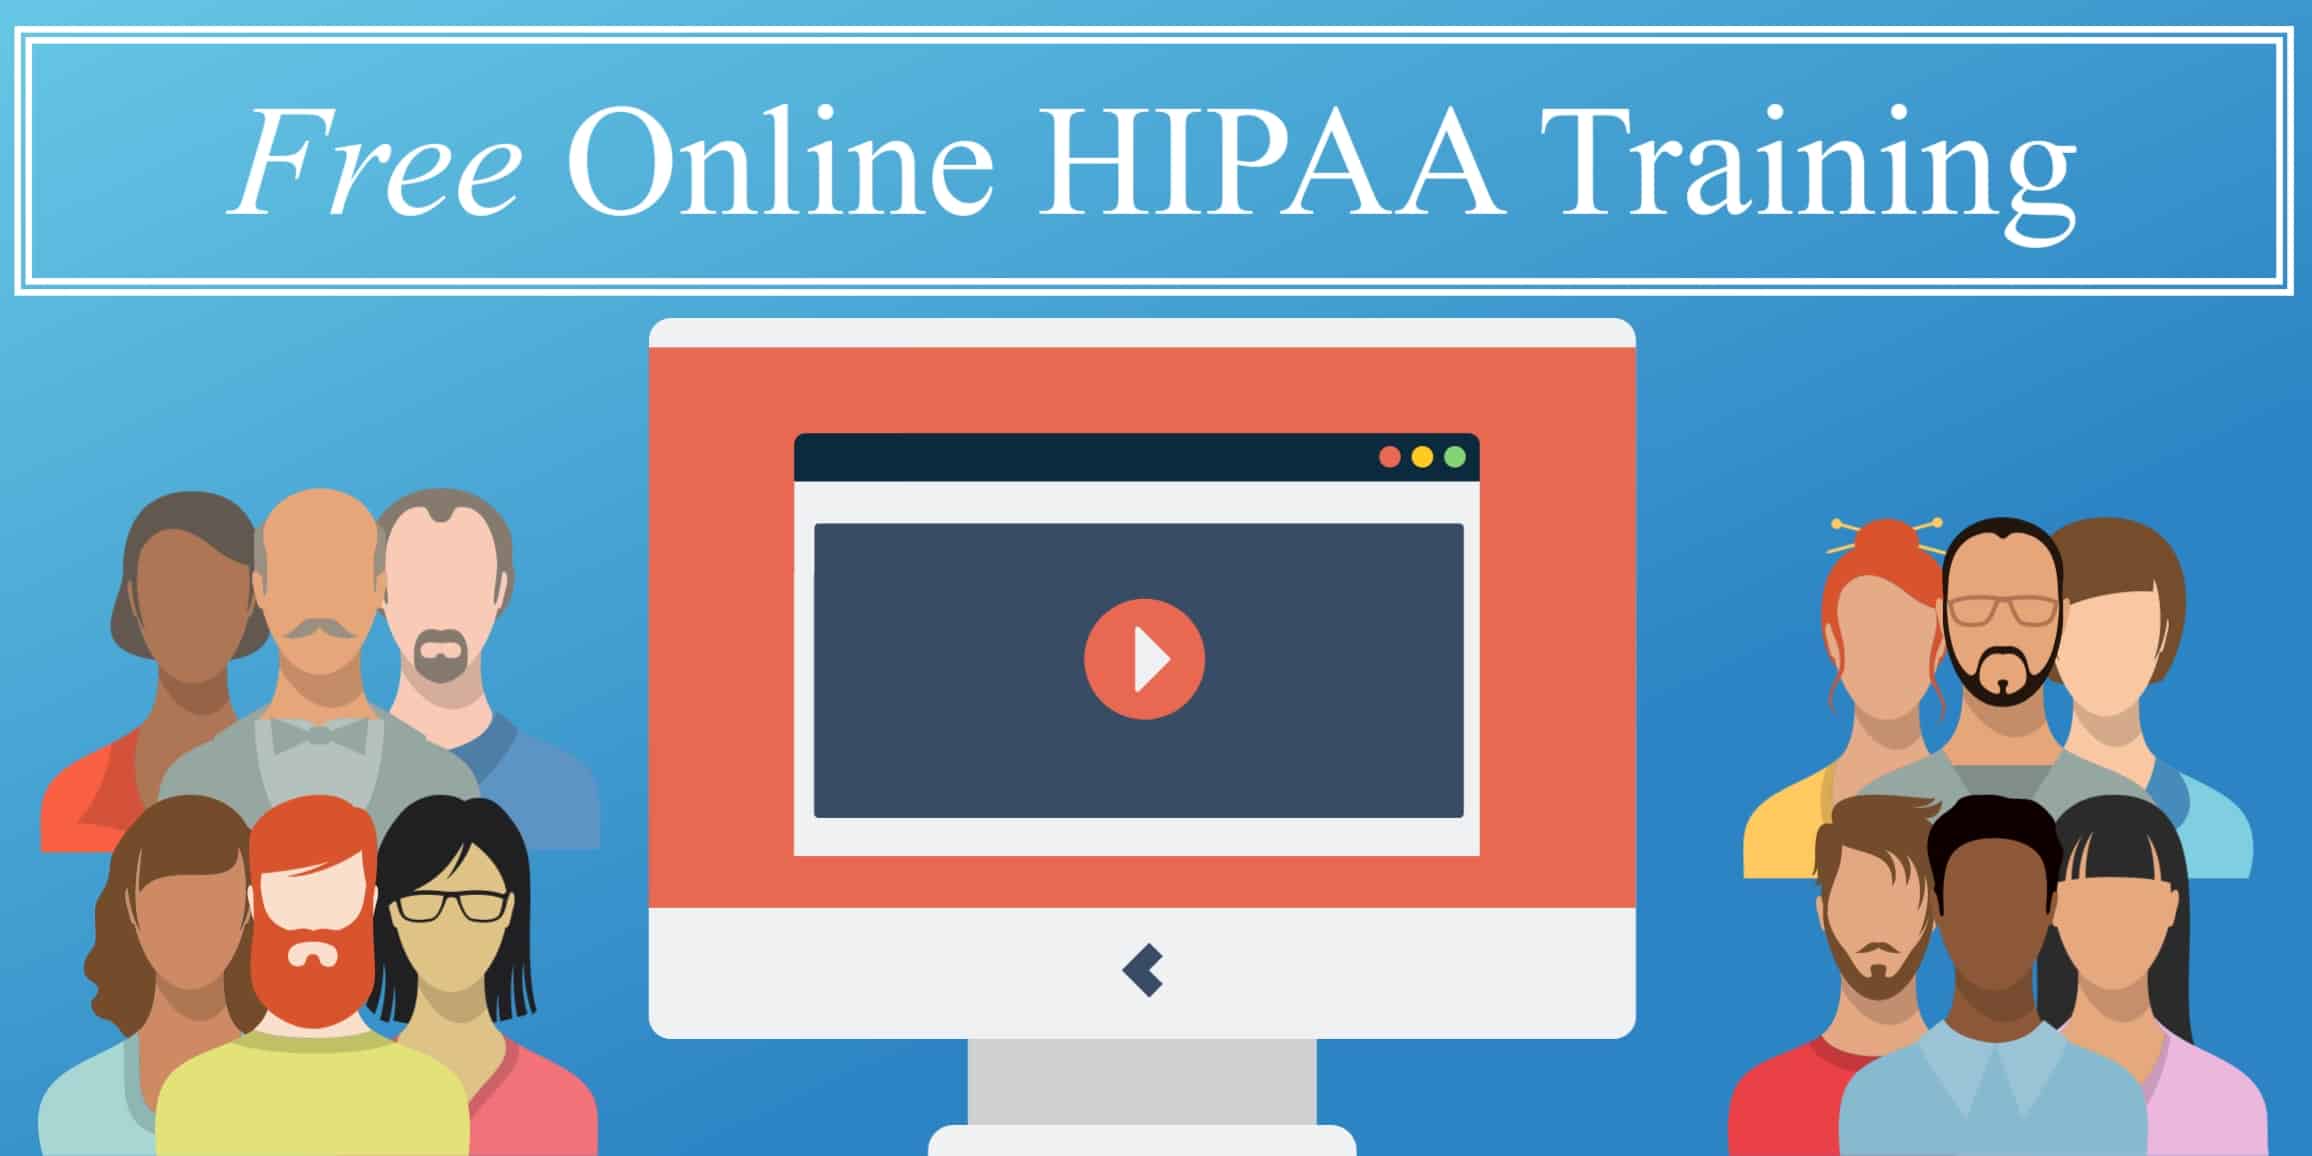 Online HIPAA Training